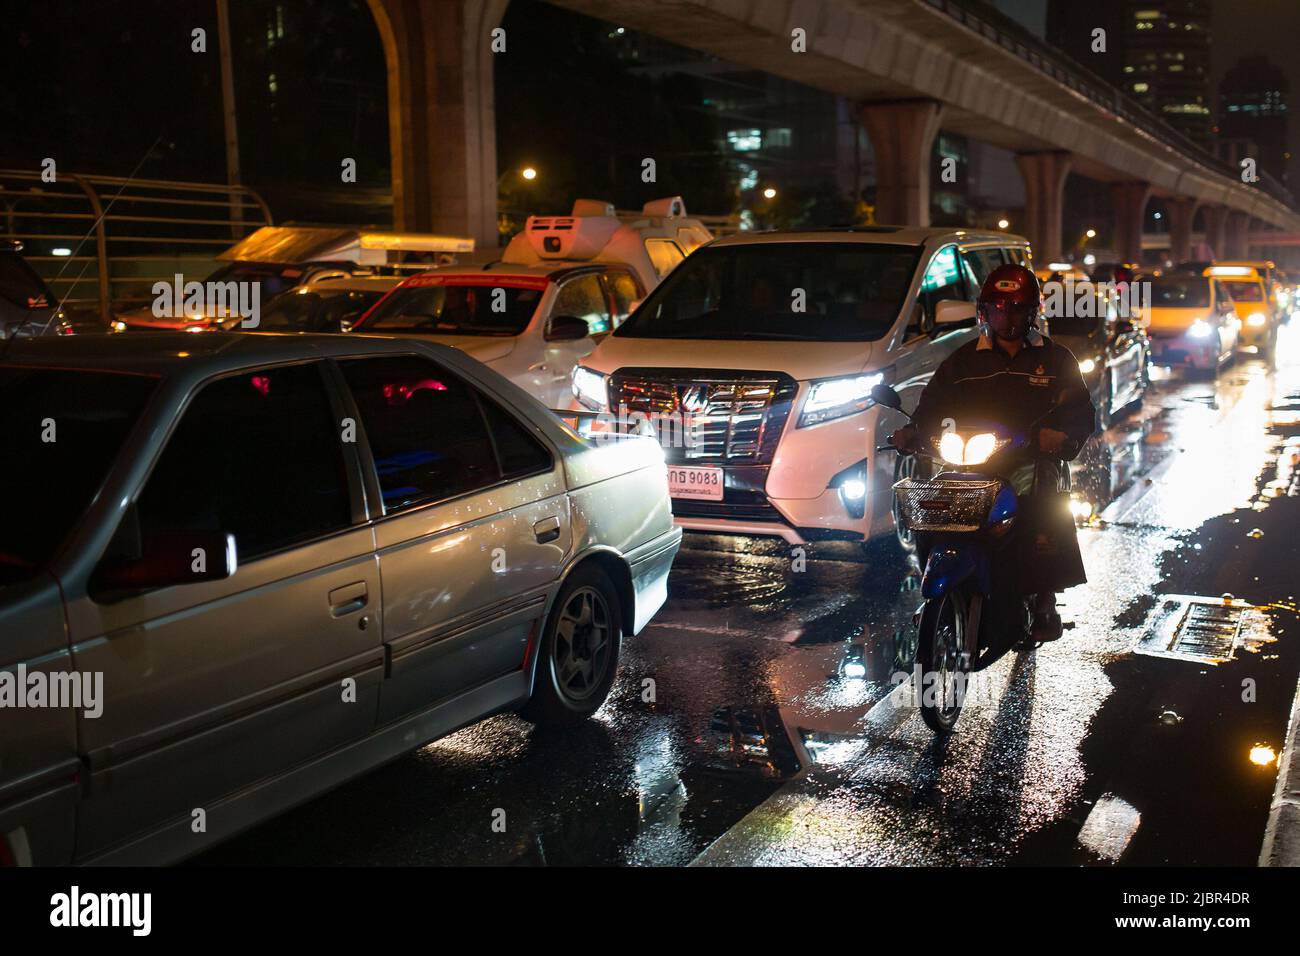 Bangkok, Thailand - October 28, 2016: Evening traffic on the streets of Bangkok, Thailand. Stock Photo